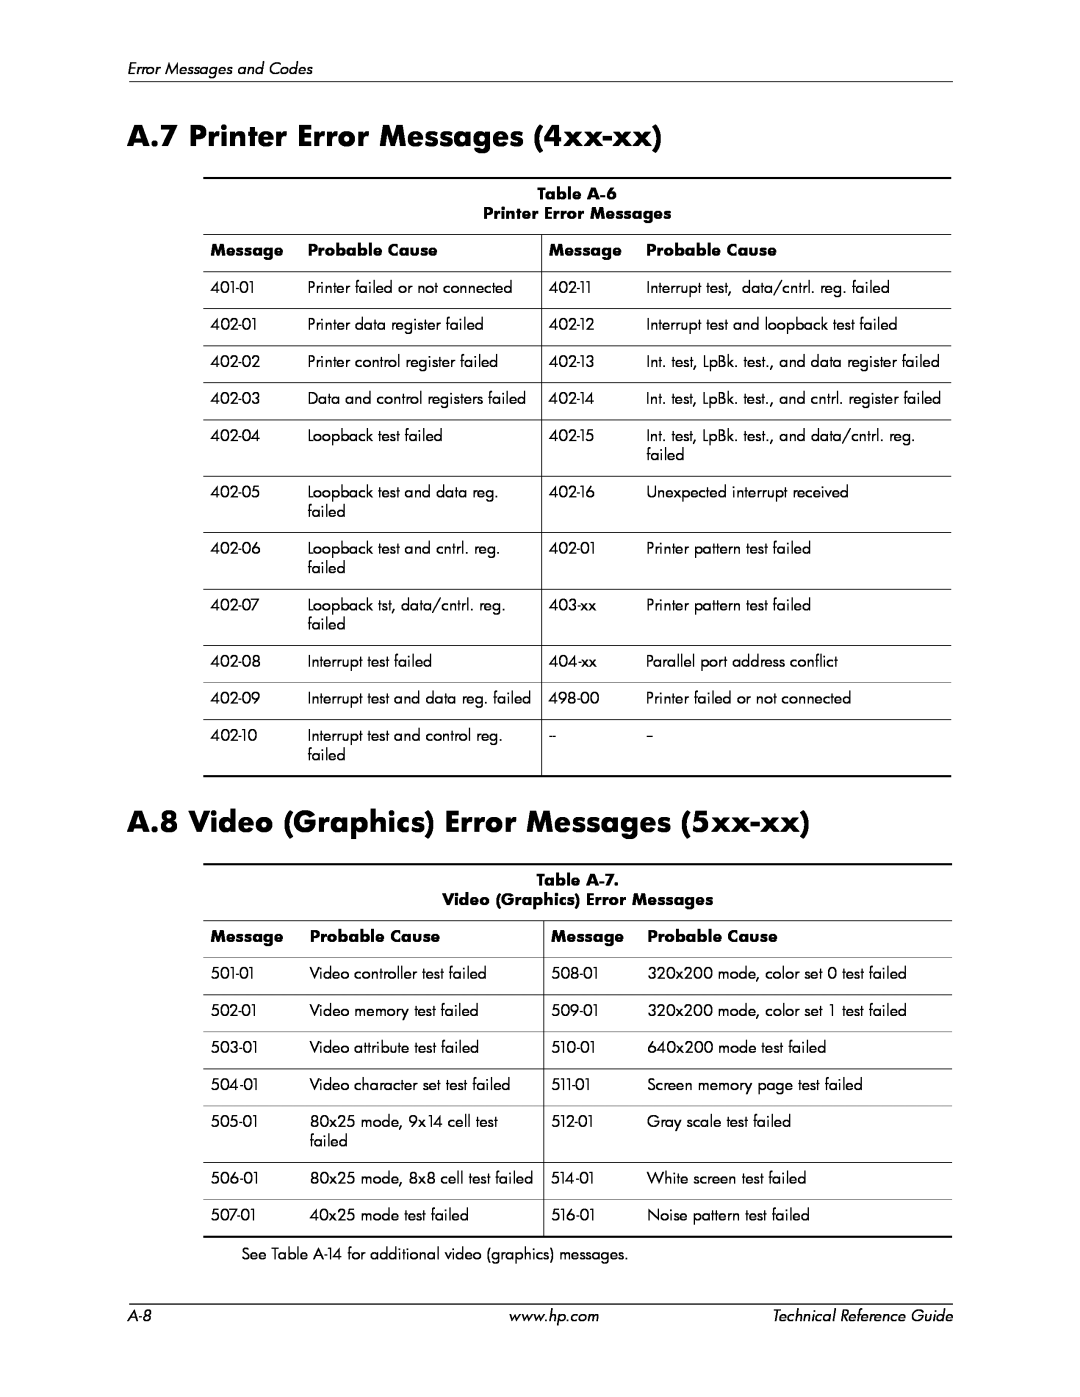 HP 8000 tower manual A.7 Printer Error Messages, A.8 Video Graphics Error Messages 